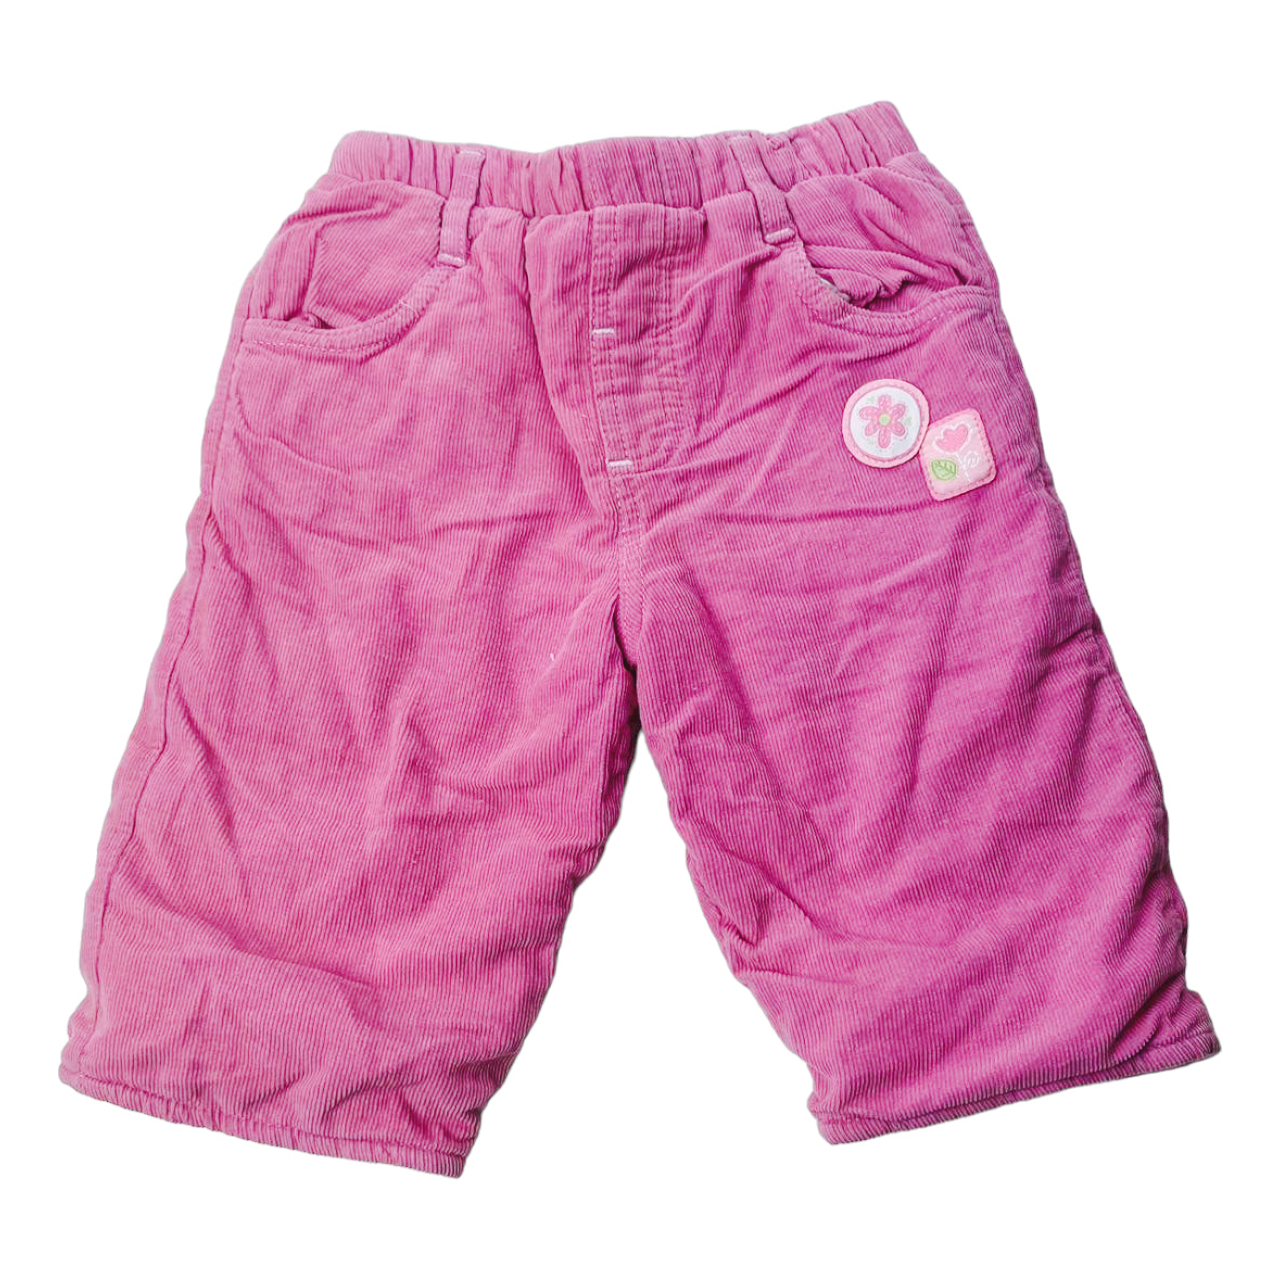 Pantalon de Cotele rosado forrado con interior de algodon